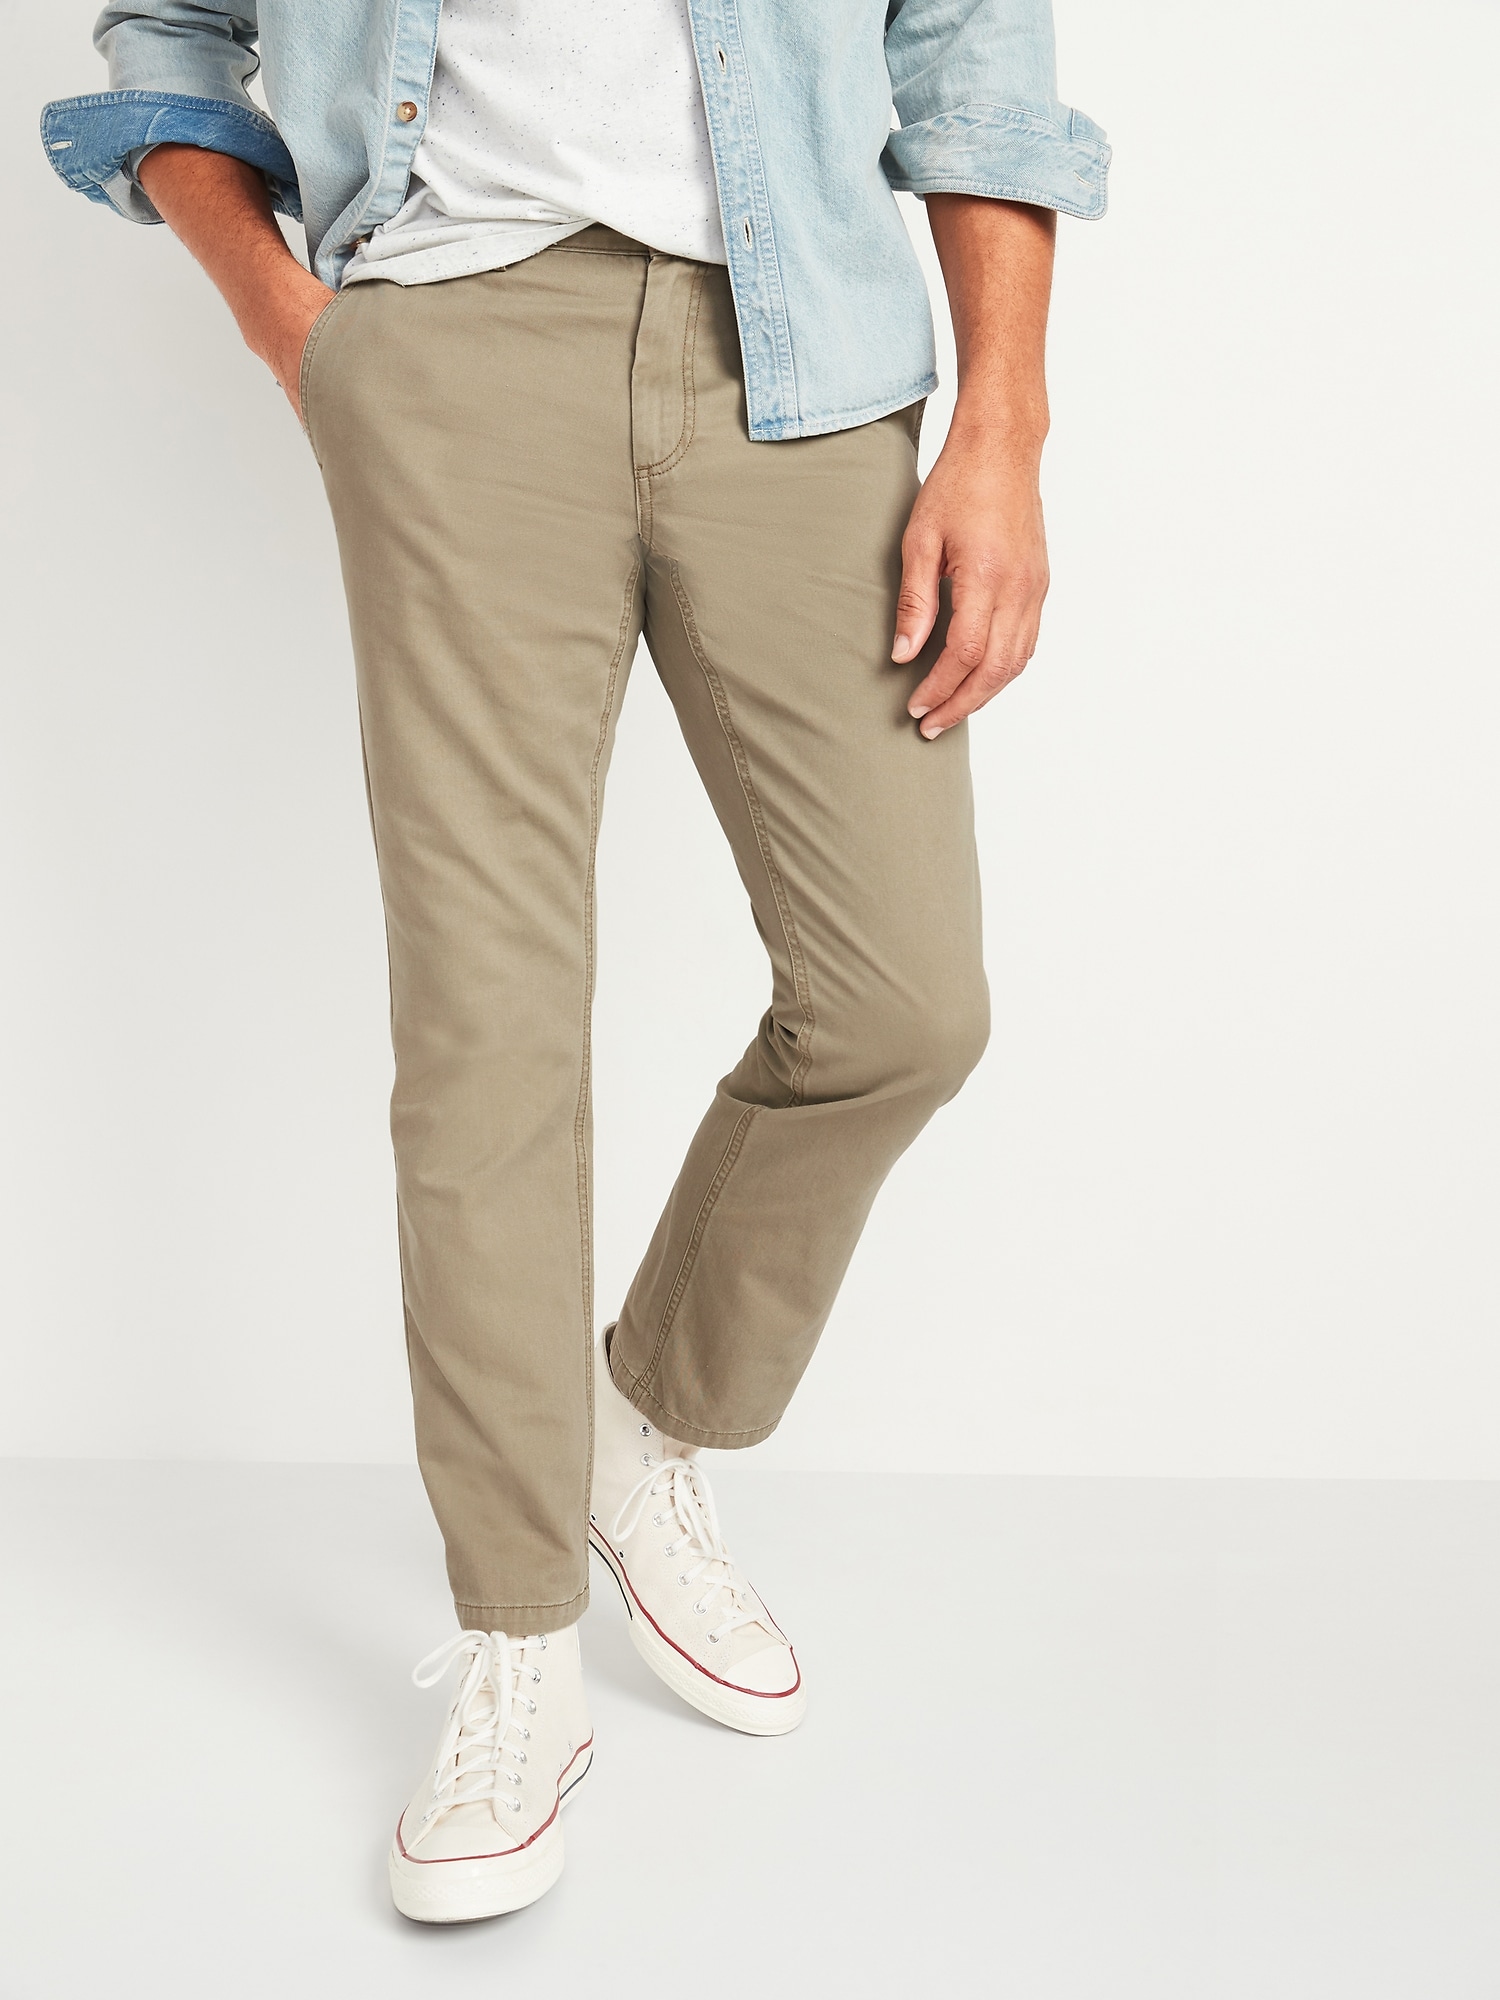 Old Navy | Pants & Jumpsuits | Old Navy Size Skinny Khaki Pants | Poshmark